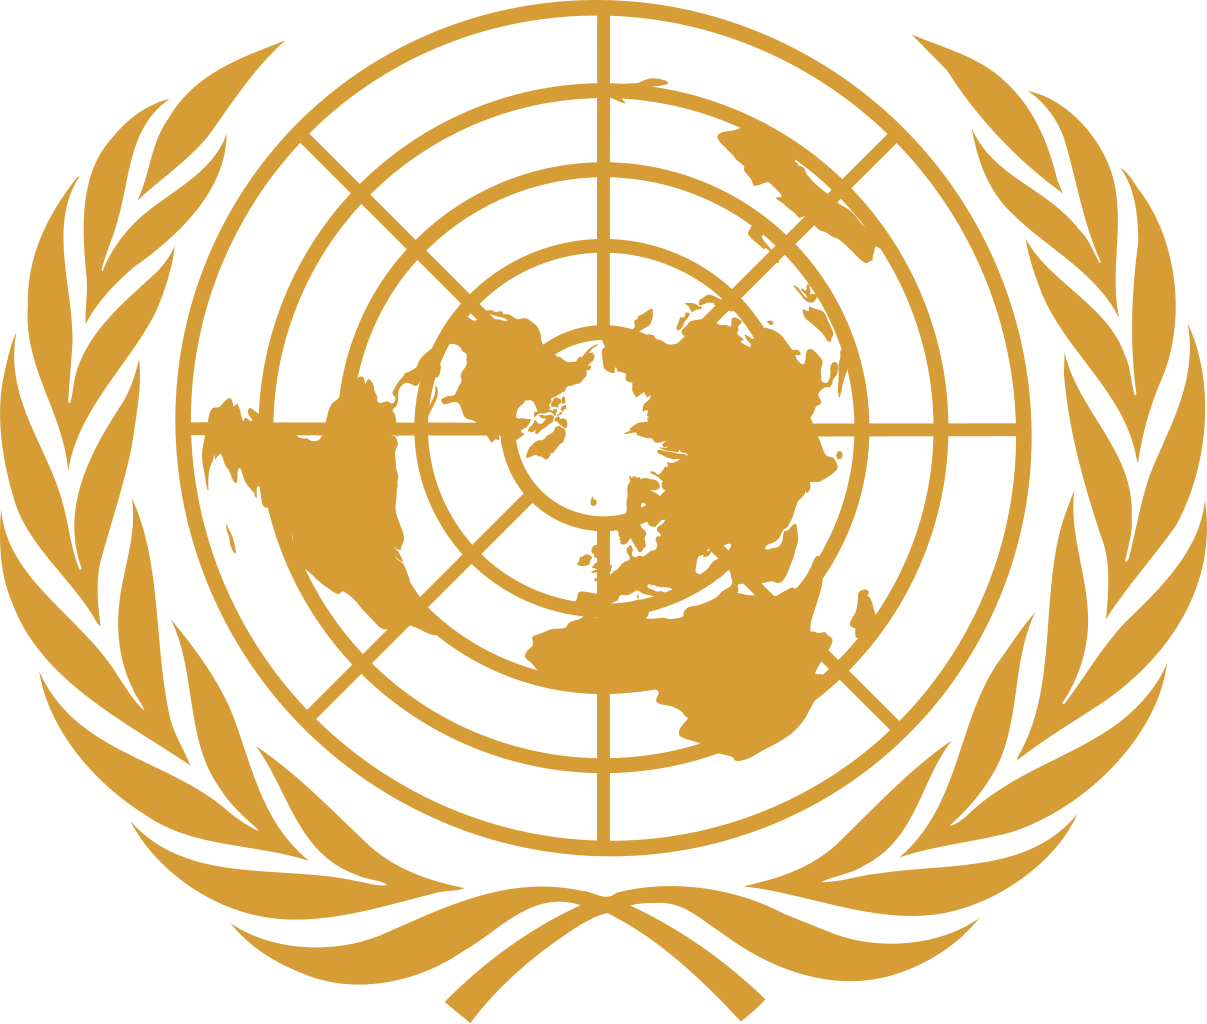 Thumbnail forModel United Nations